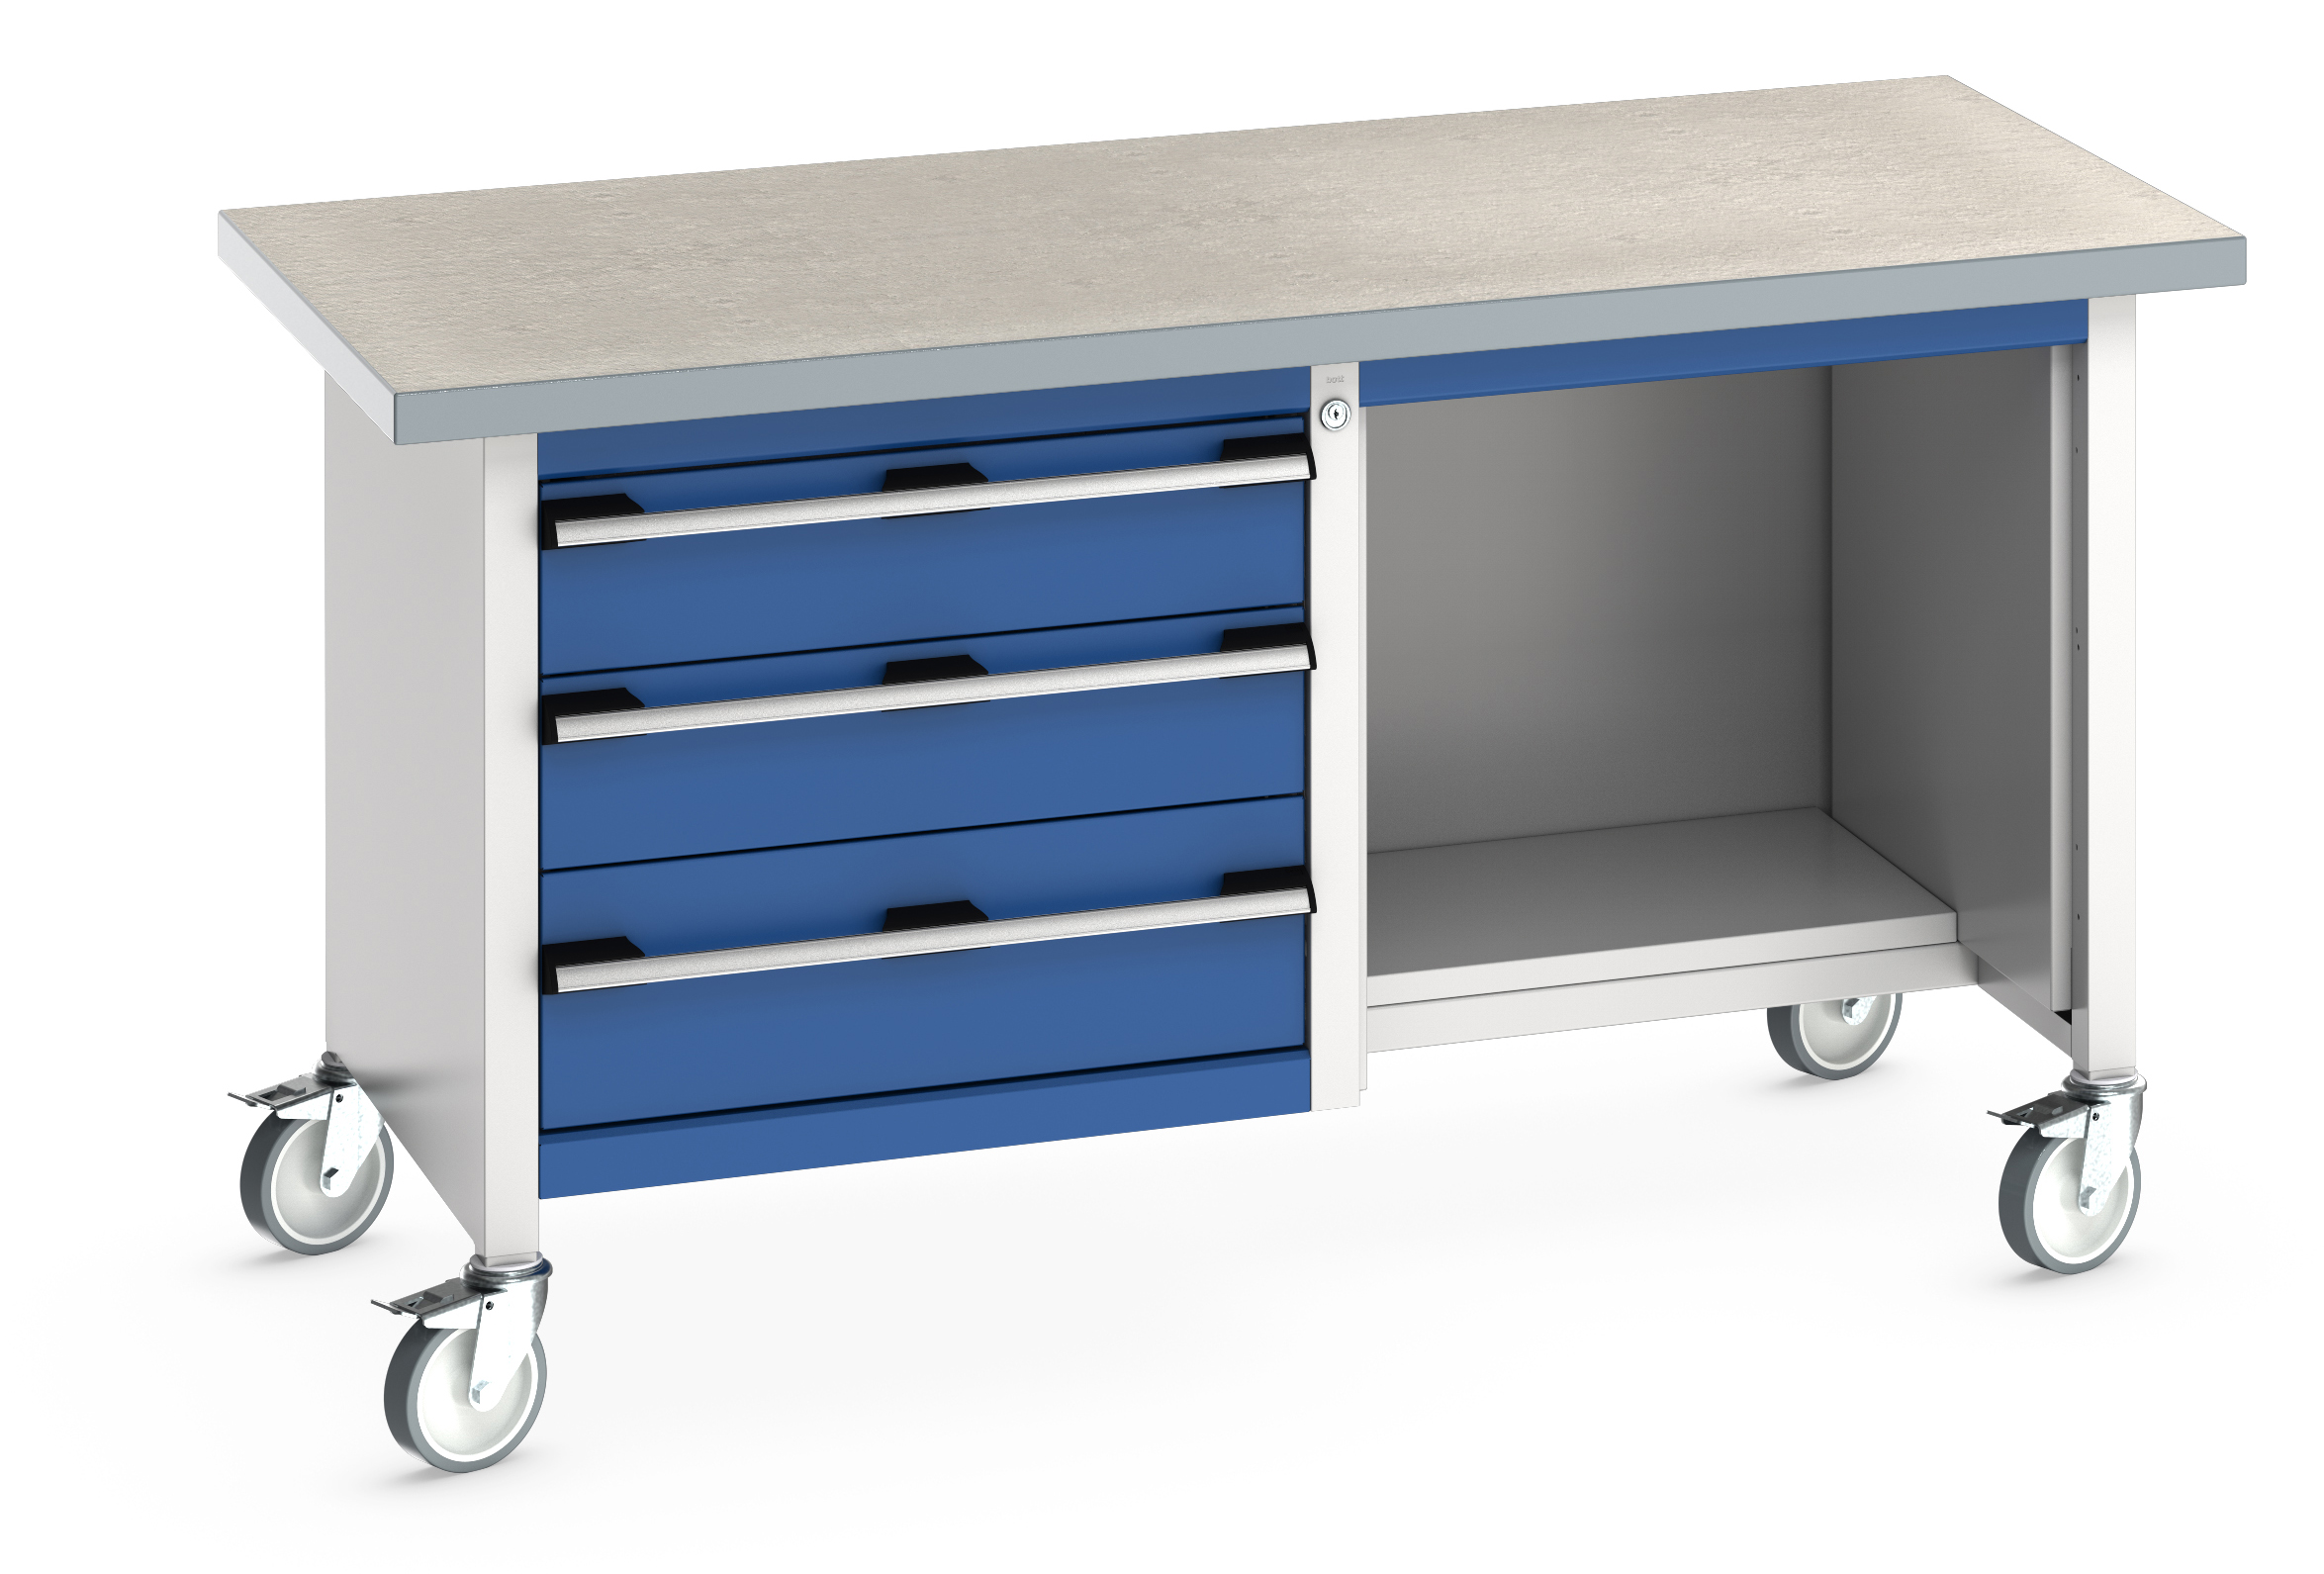 Bott Cubio Mobile Storage Bench With 3 Drawer Cabinet / Open With Half Depth Base Shelf - 41002117.11V